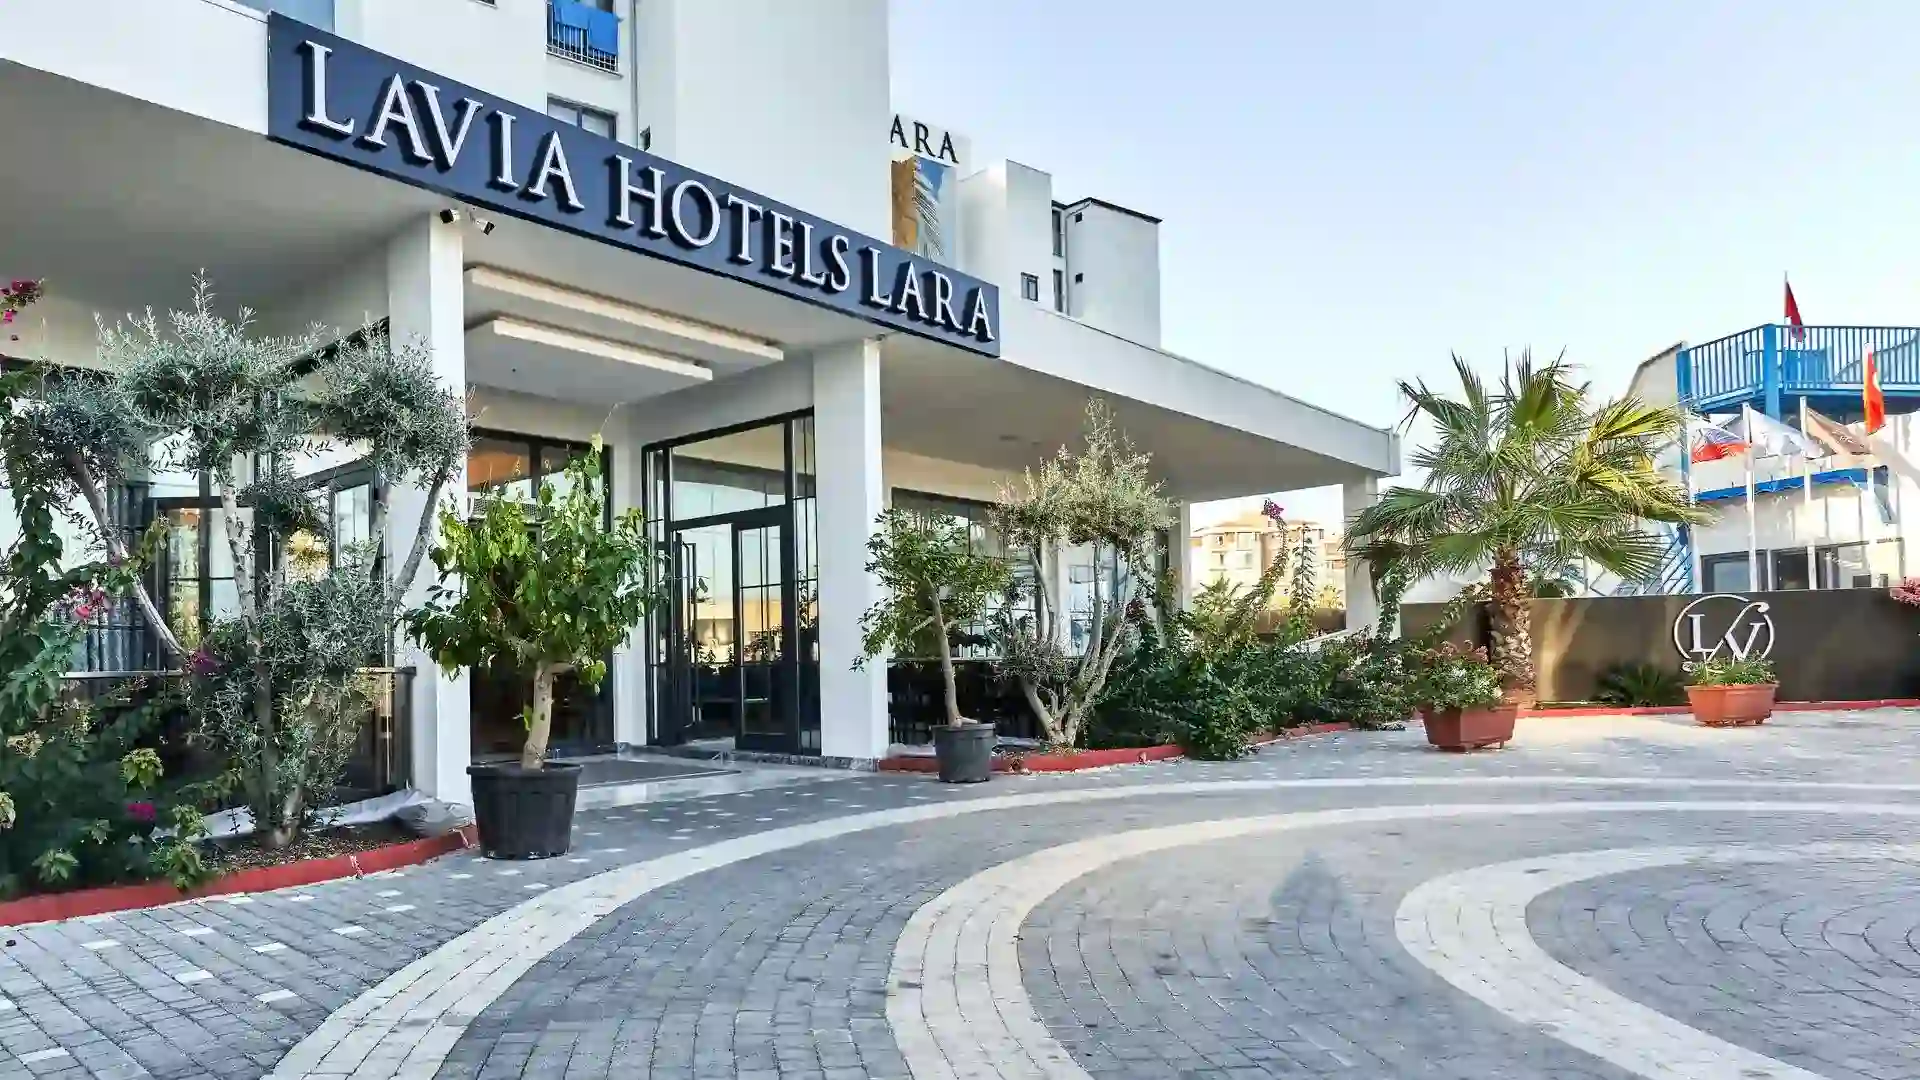 LAVIA HOTELS LARA | Restoran